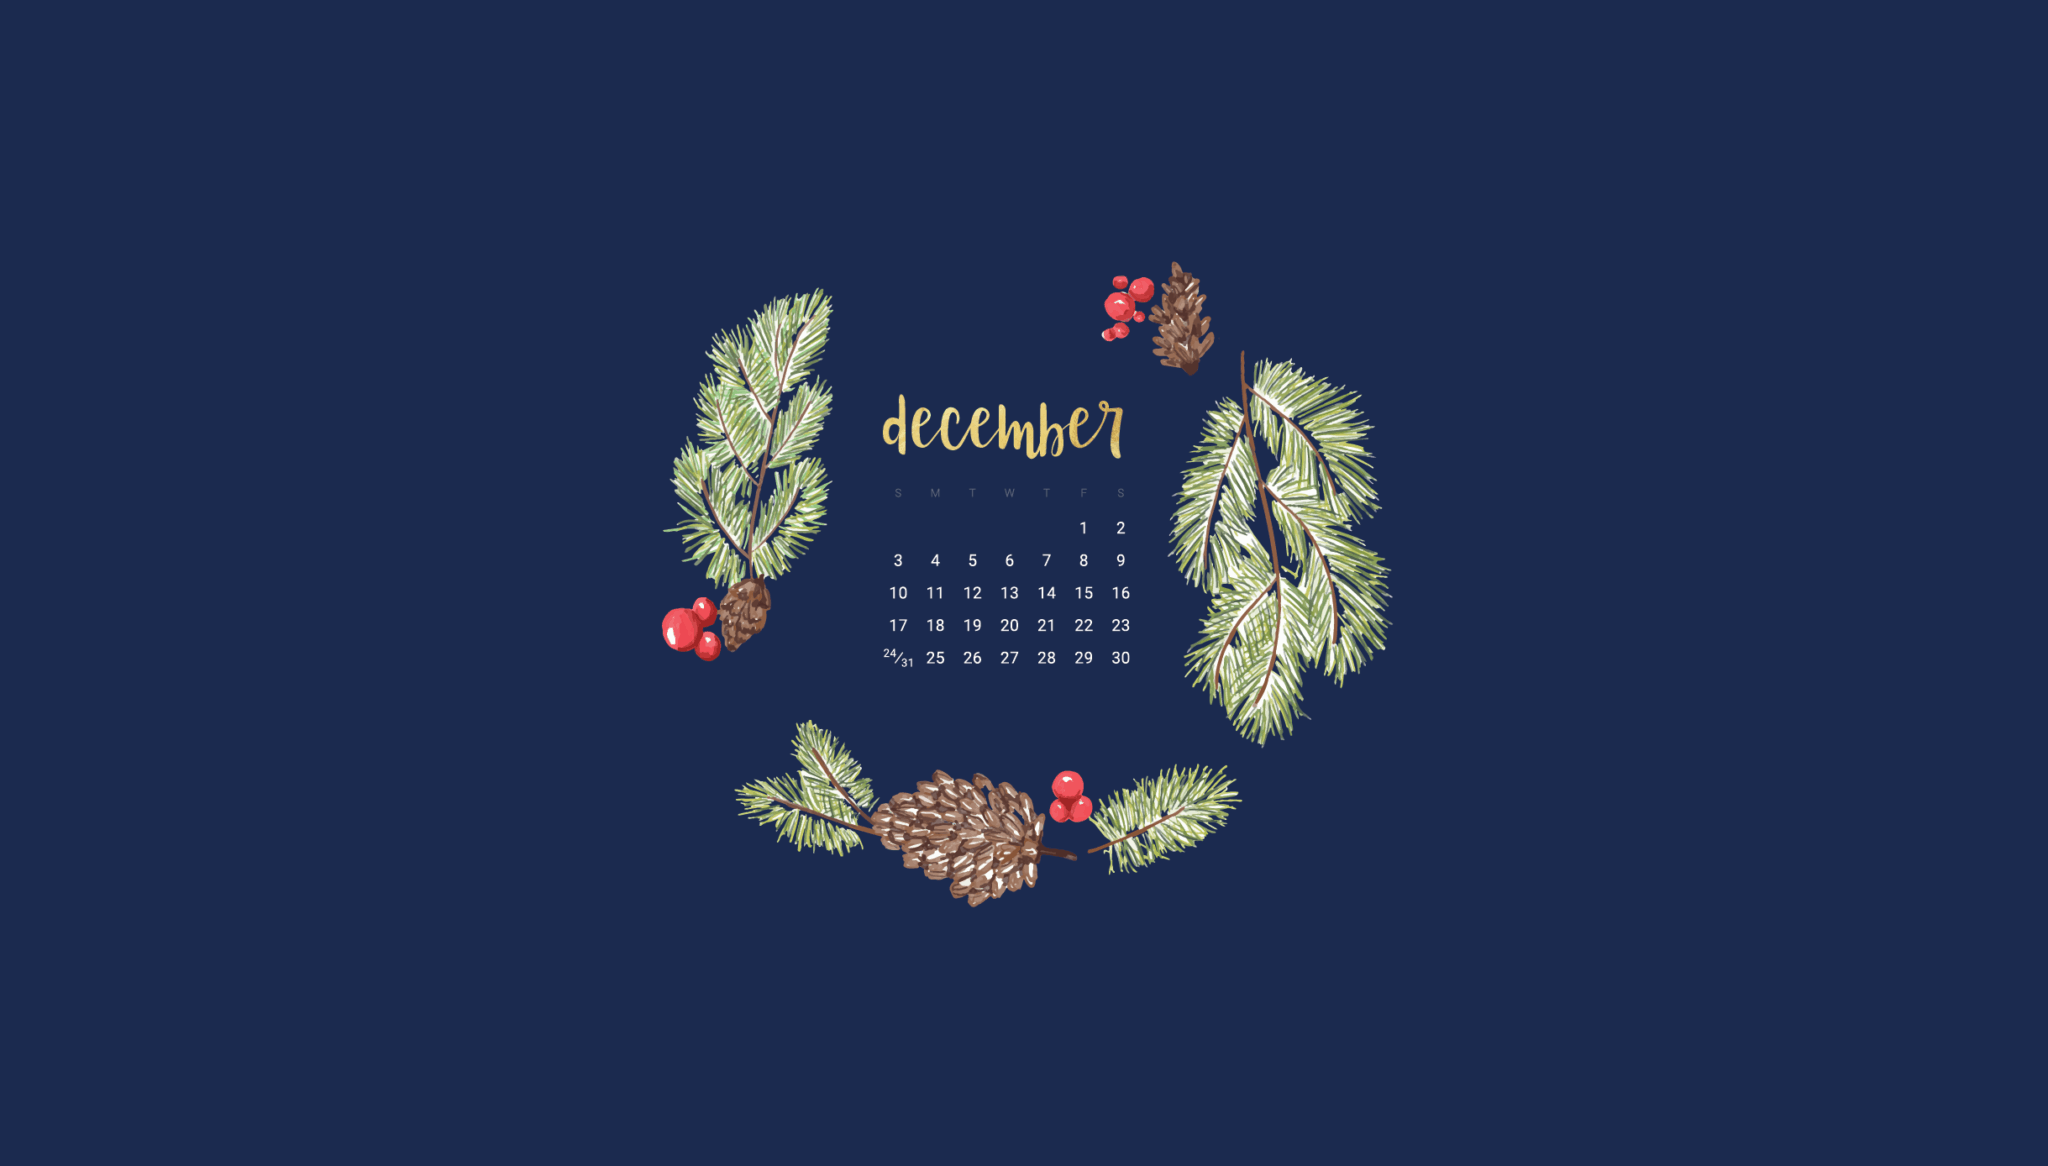 december calendar wallpaper,font,text,leaf,organism,illustration